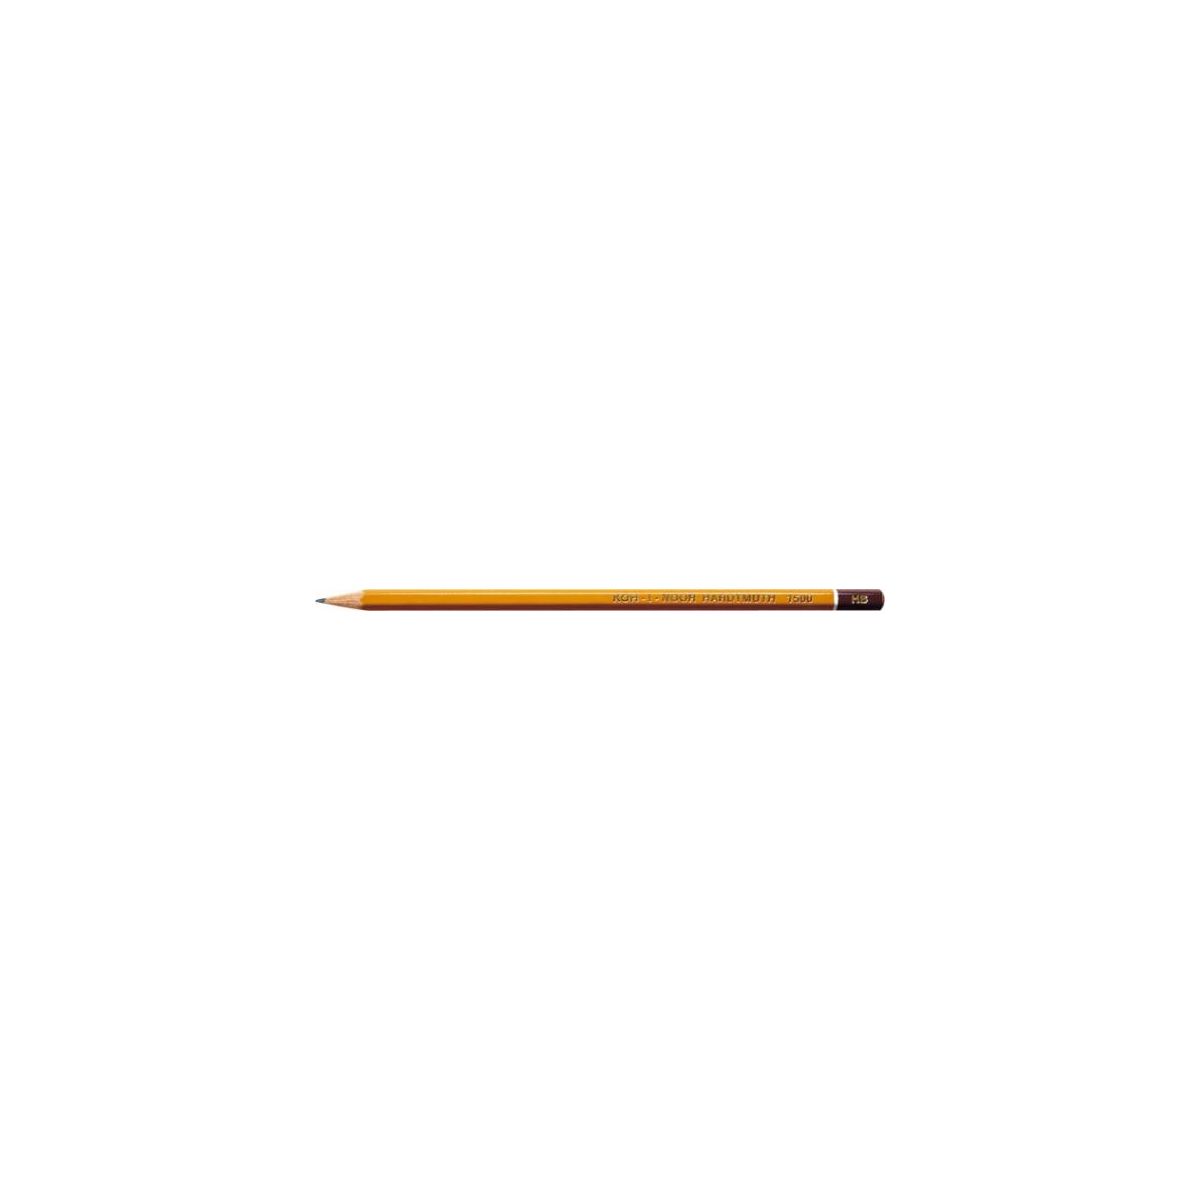 Ołówek Koh-I-Noor 1500 B